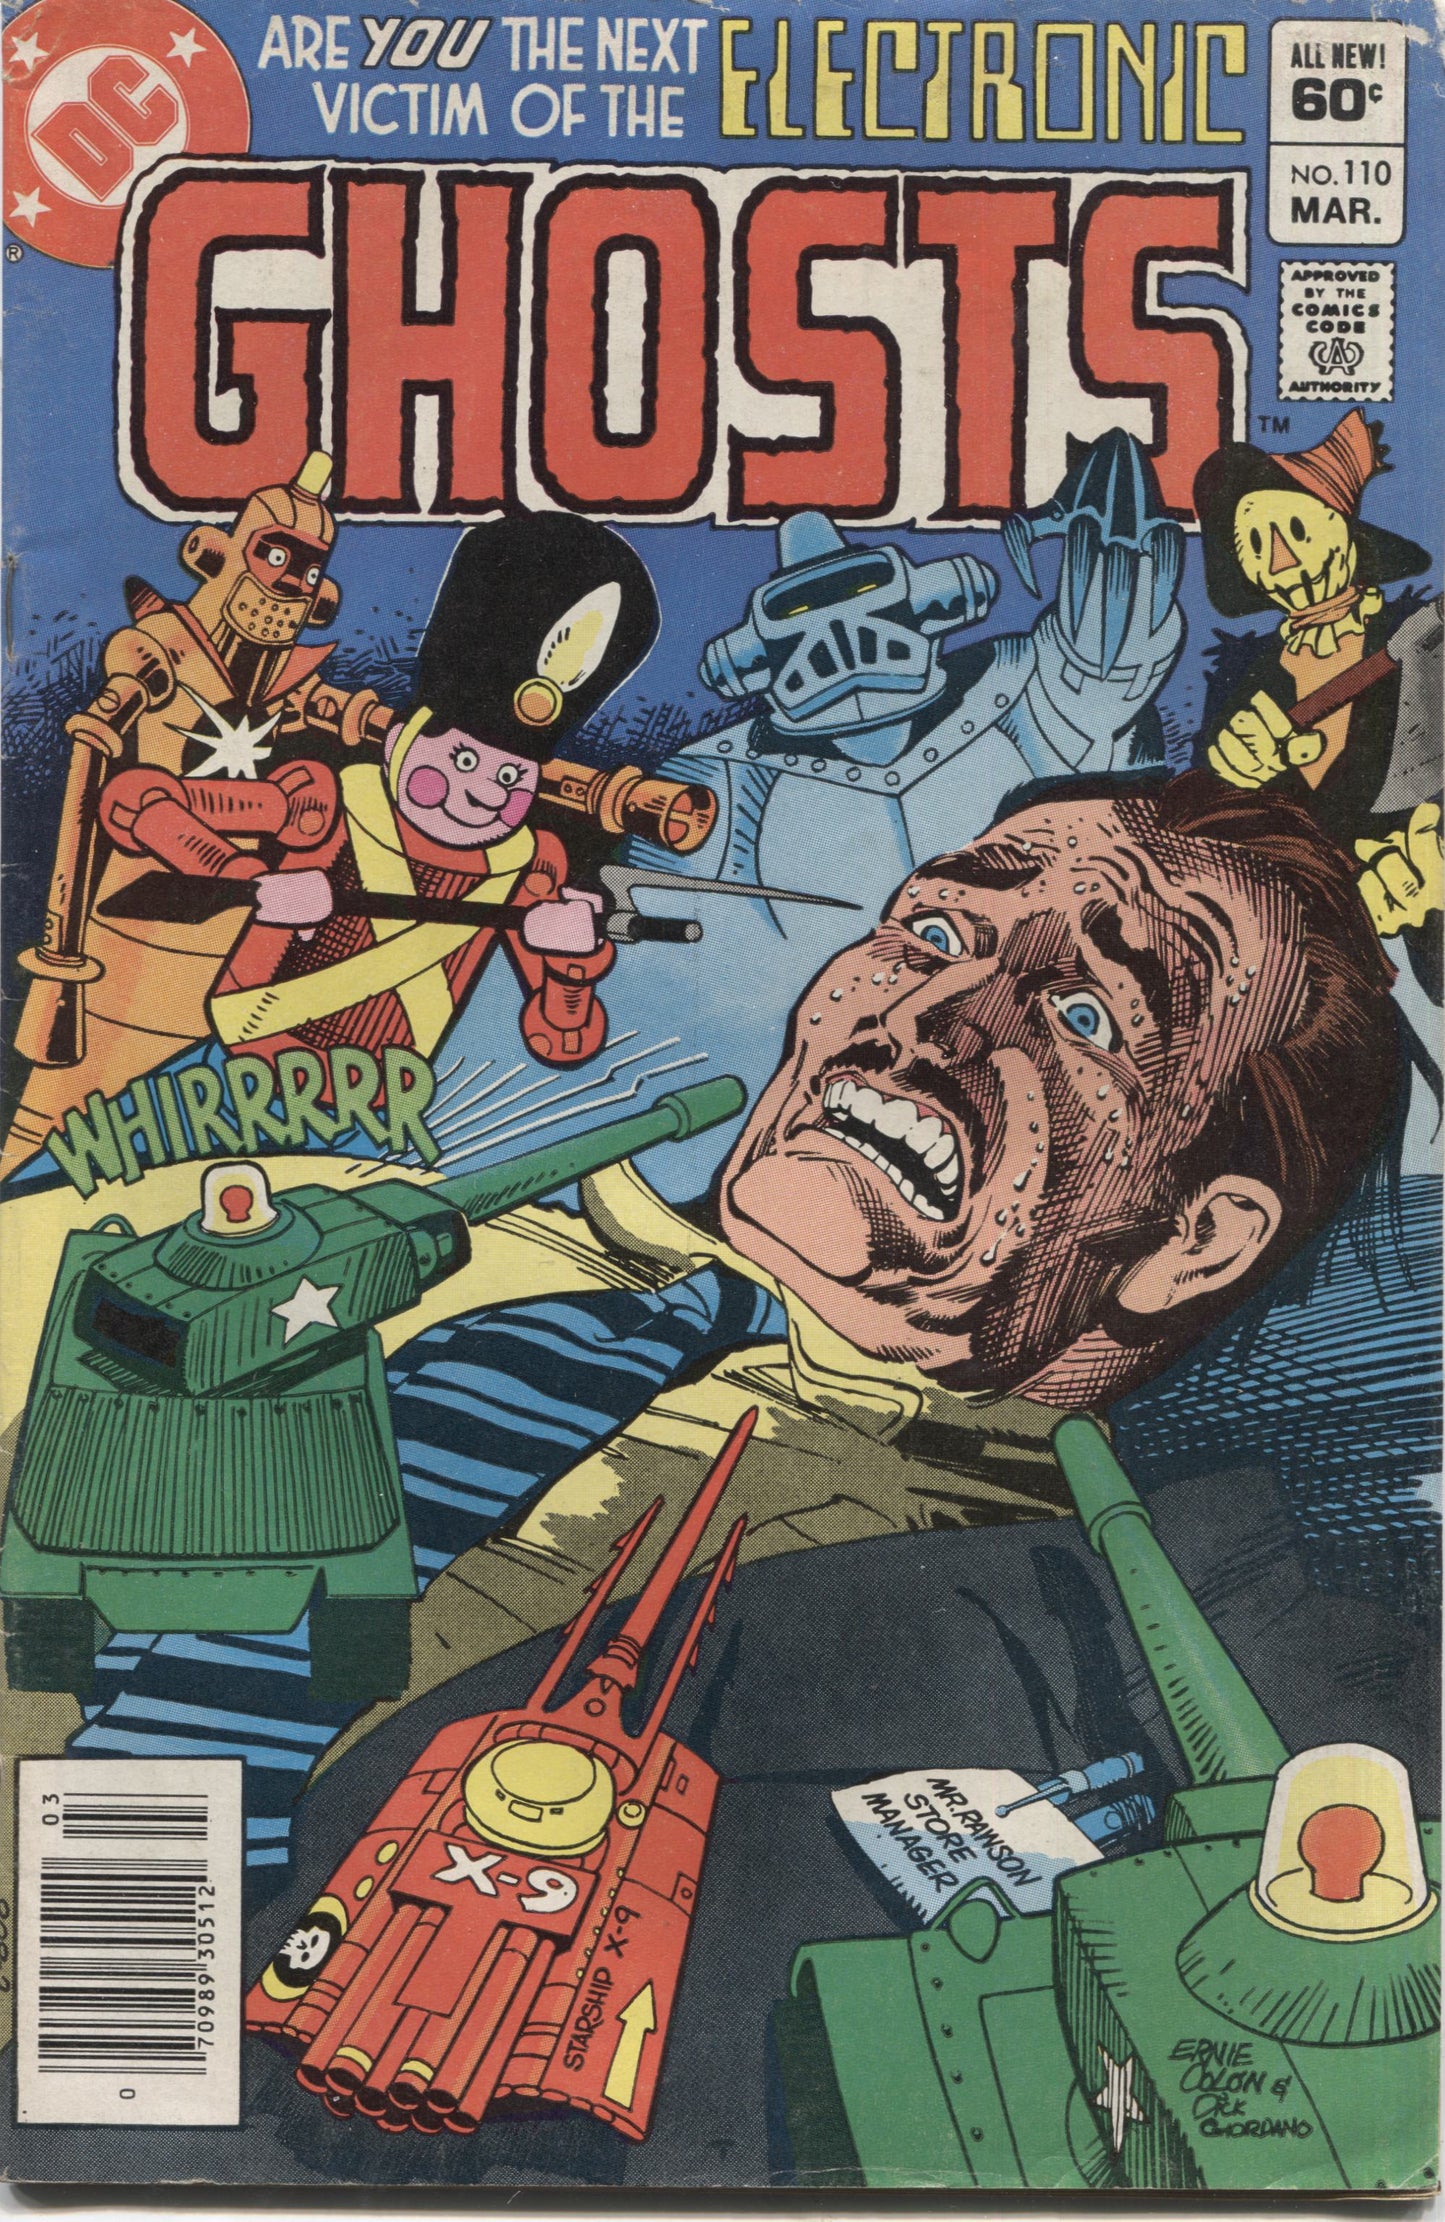 Ghosts No. 110, DC Comics, March 1982